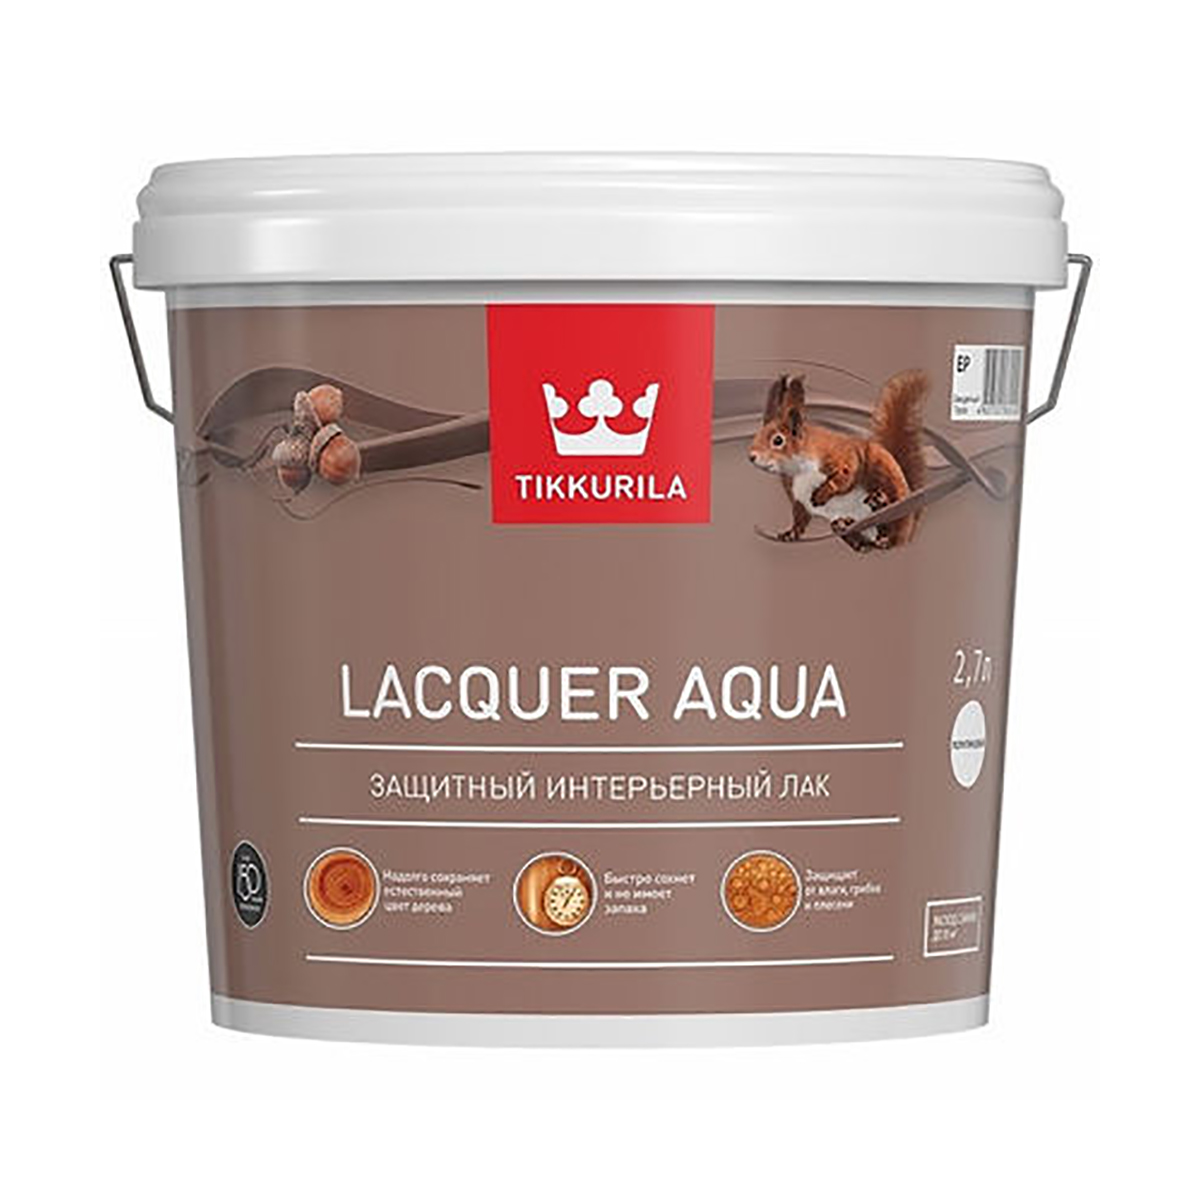 Лак Tikkurila Euro Lacquer Aqua (700001138) бесцветный 2.7л